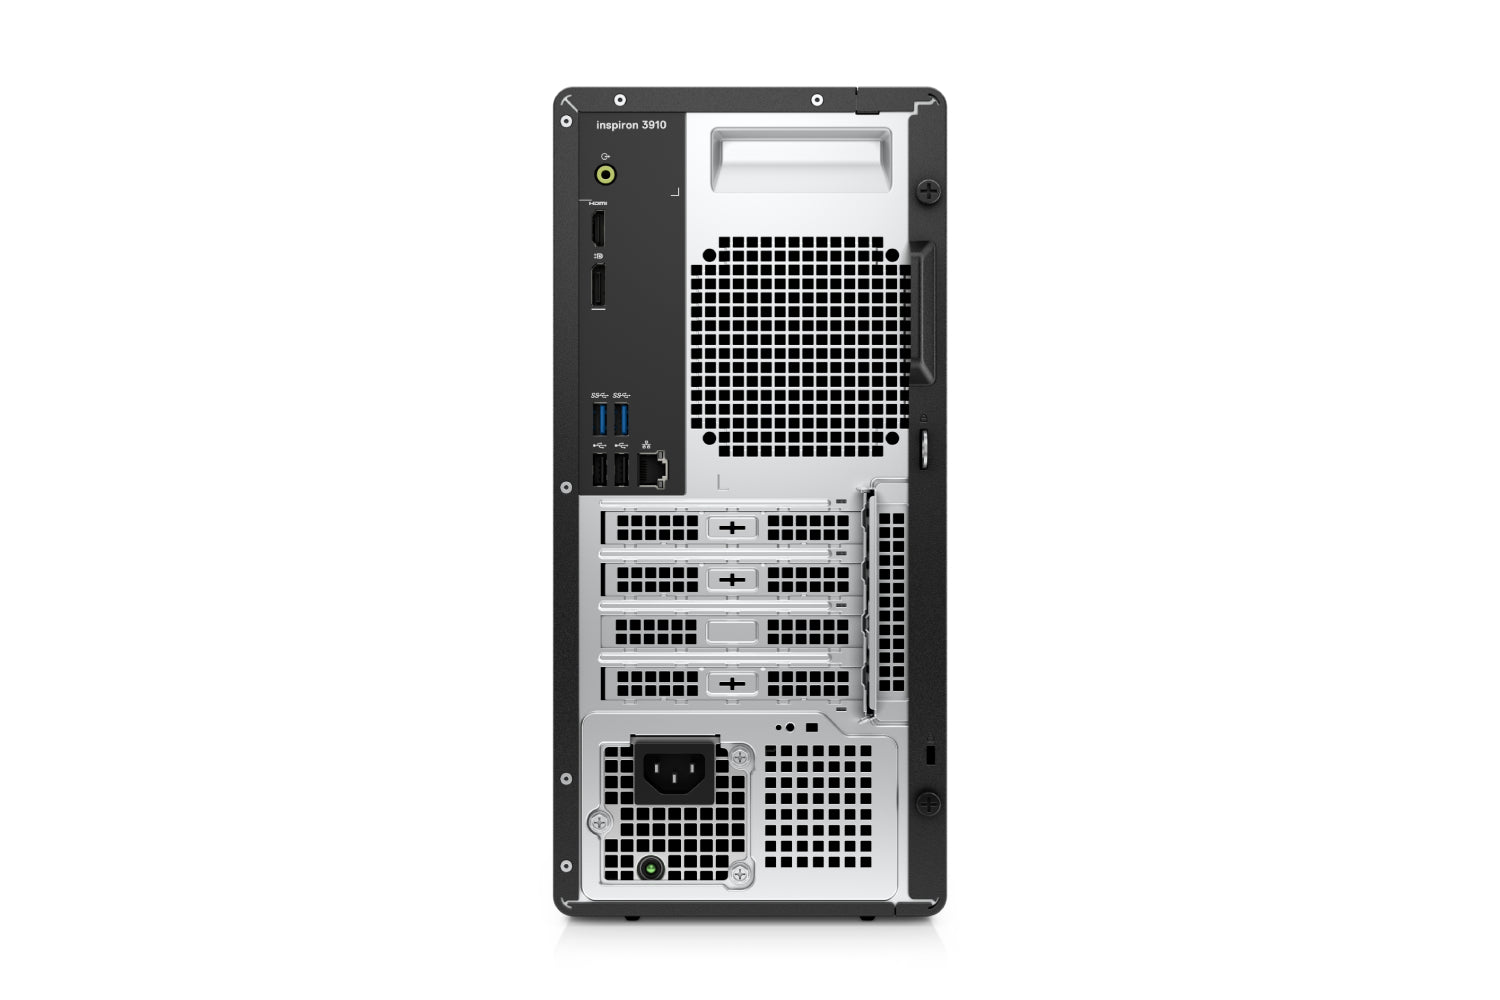 Dell Inspiron 3910 Desktop-Desktop-DELL-computerspace